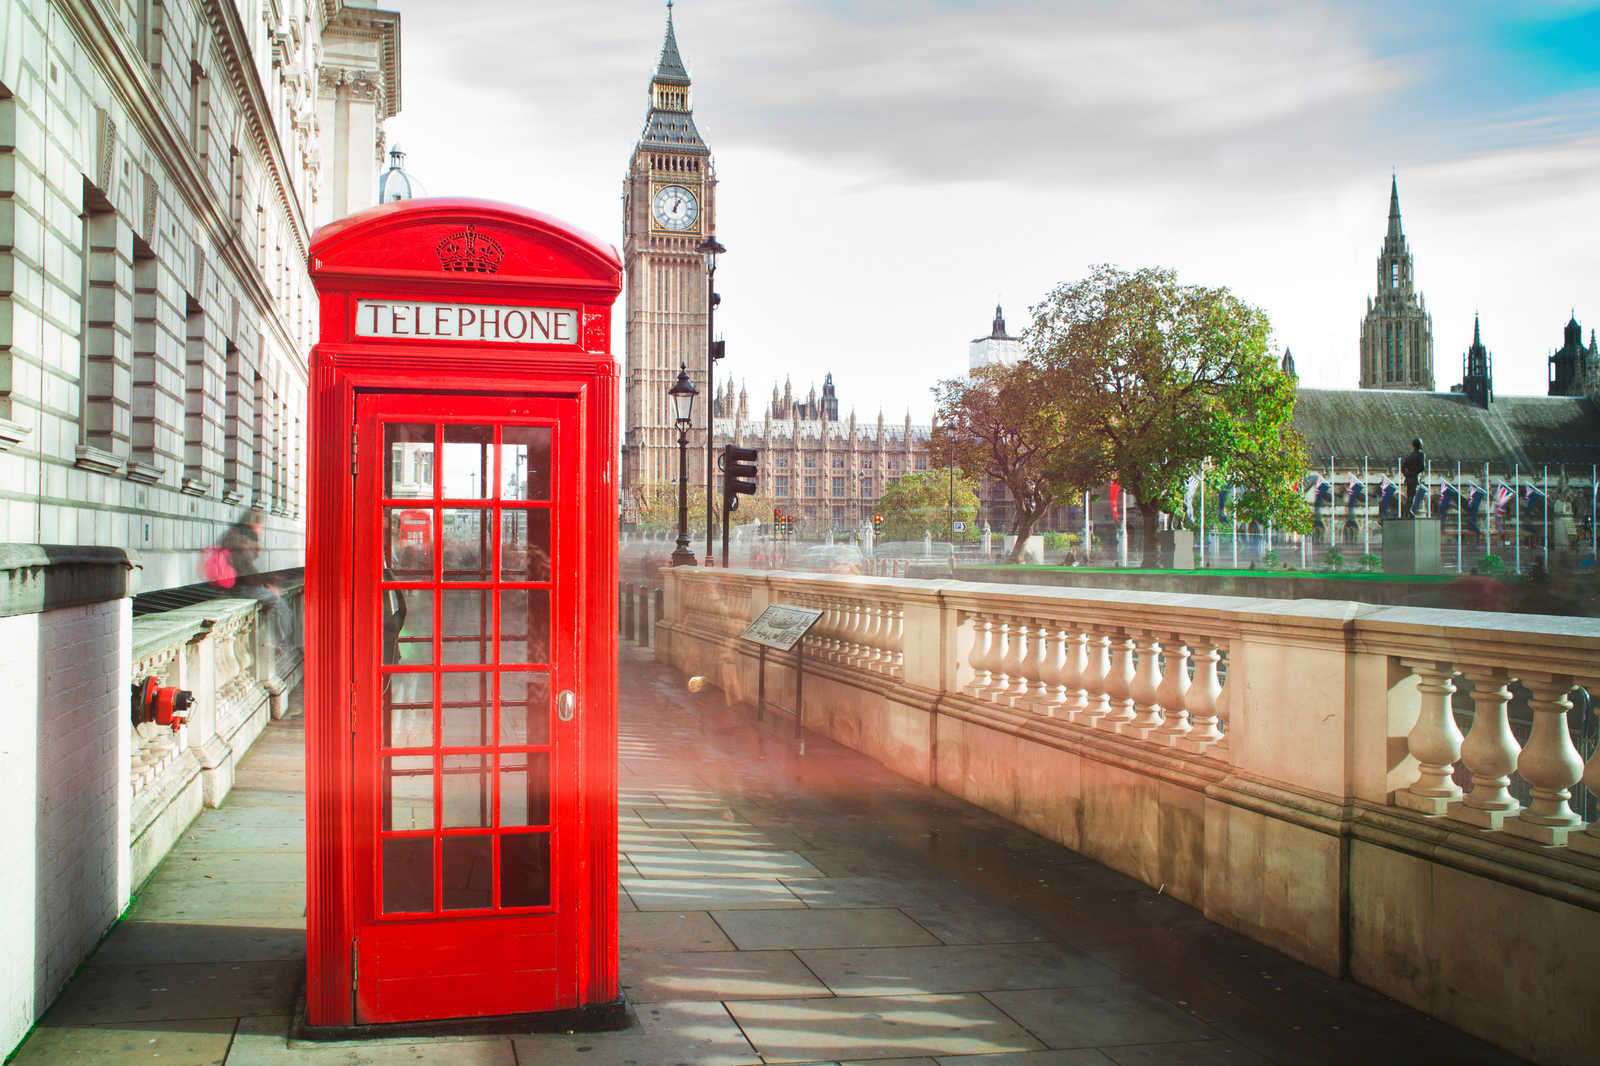             Lienzo con cabina telefónica roja en Londres - 0,90 m x 0,60 m
        